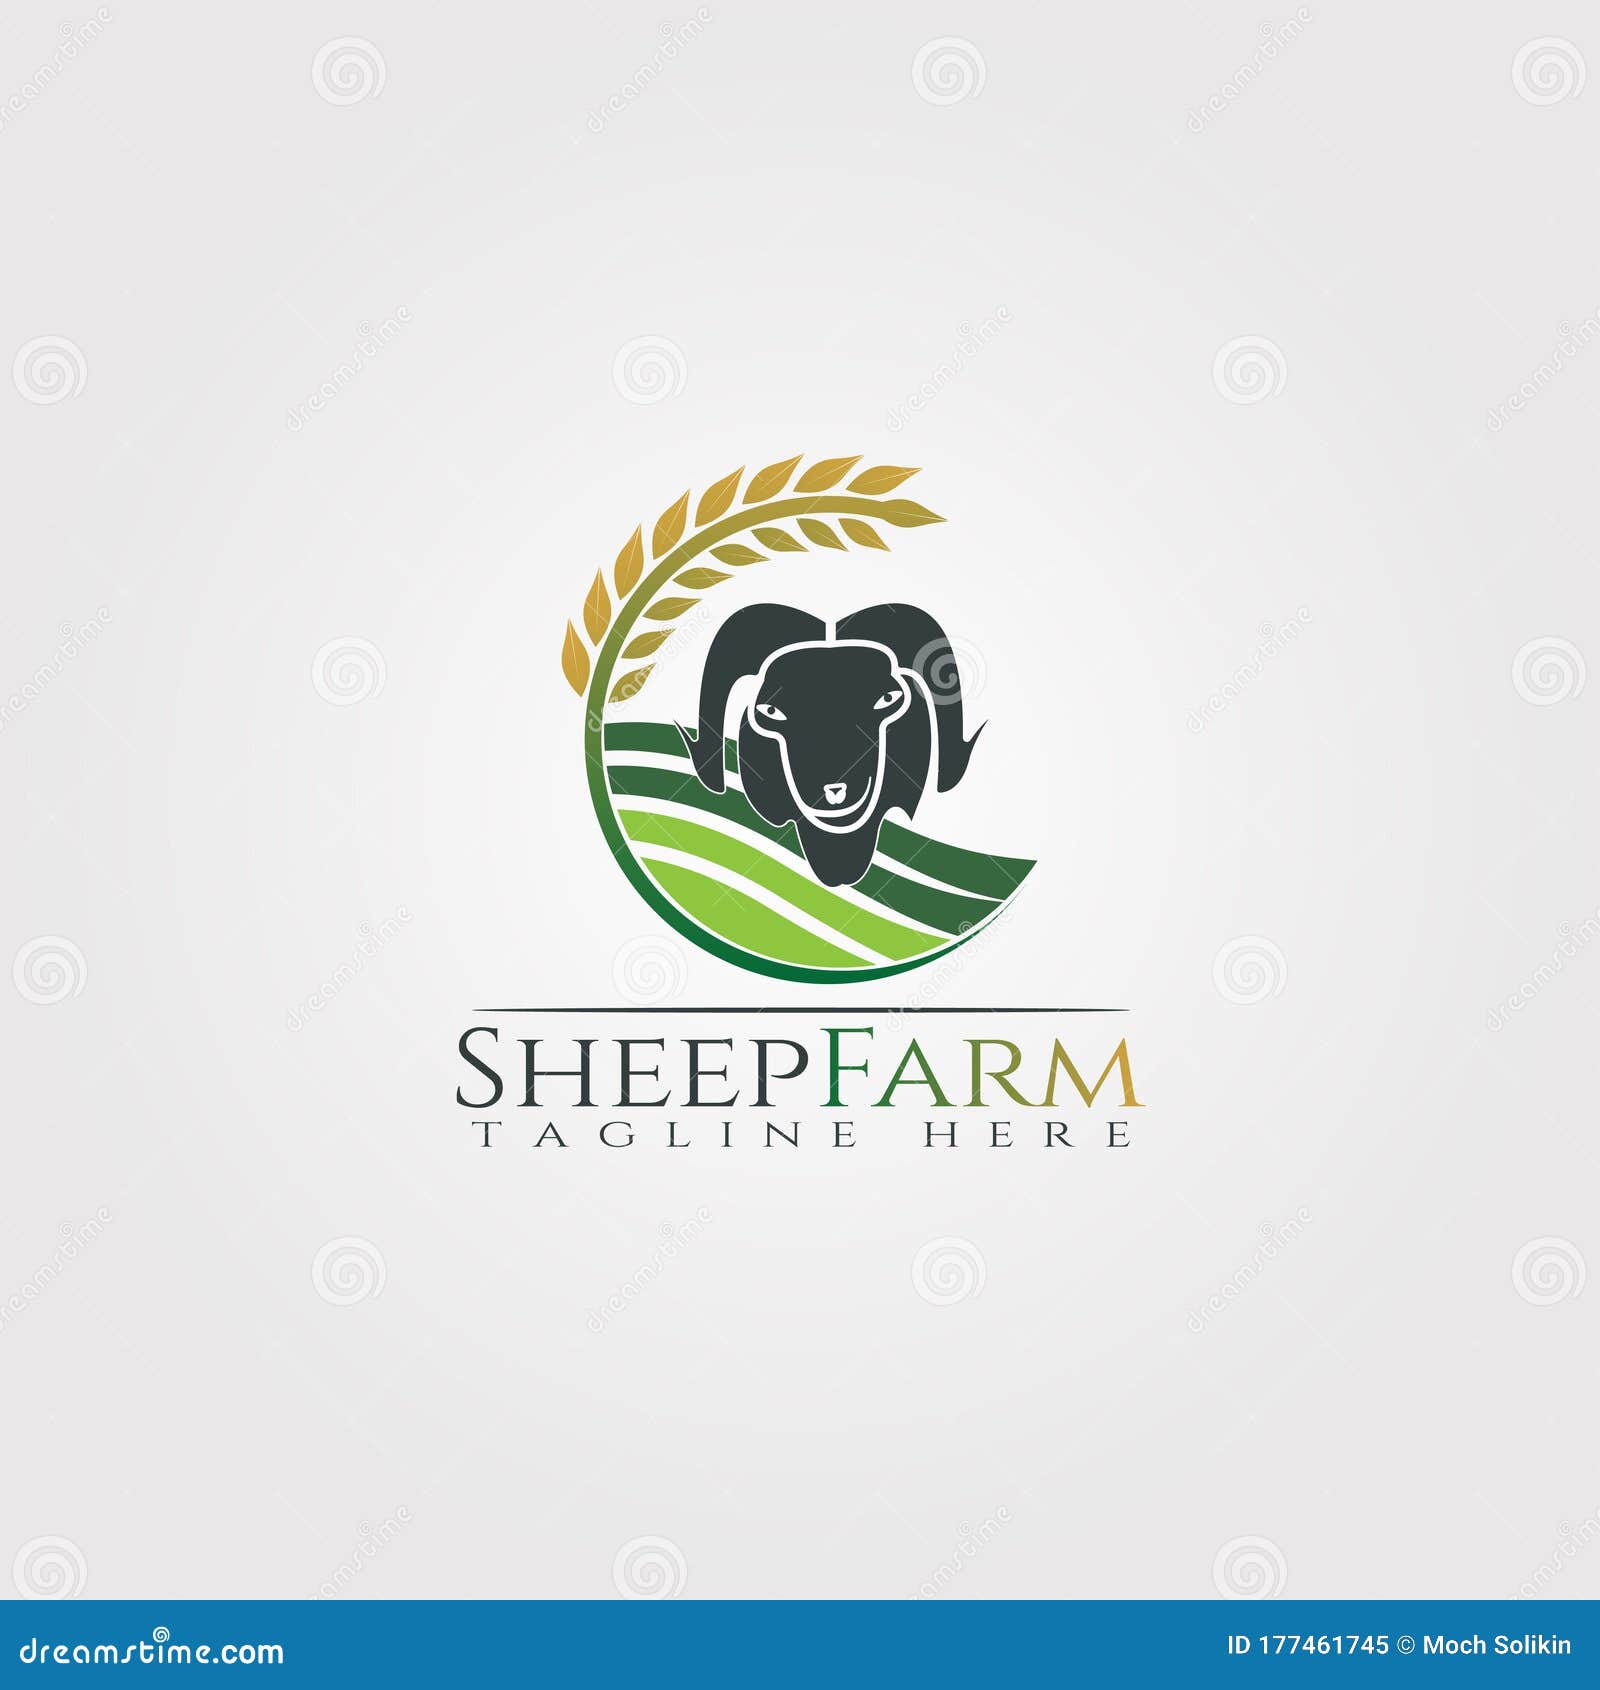 Sheep Farm Icon Template, Creative Vector Logo Design, Animal Husbandry,  Illustration Element Stock Vector - Illustration of logo, head: 177461745